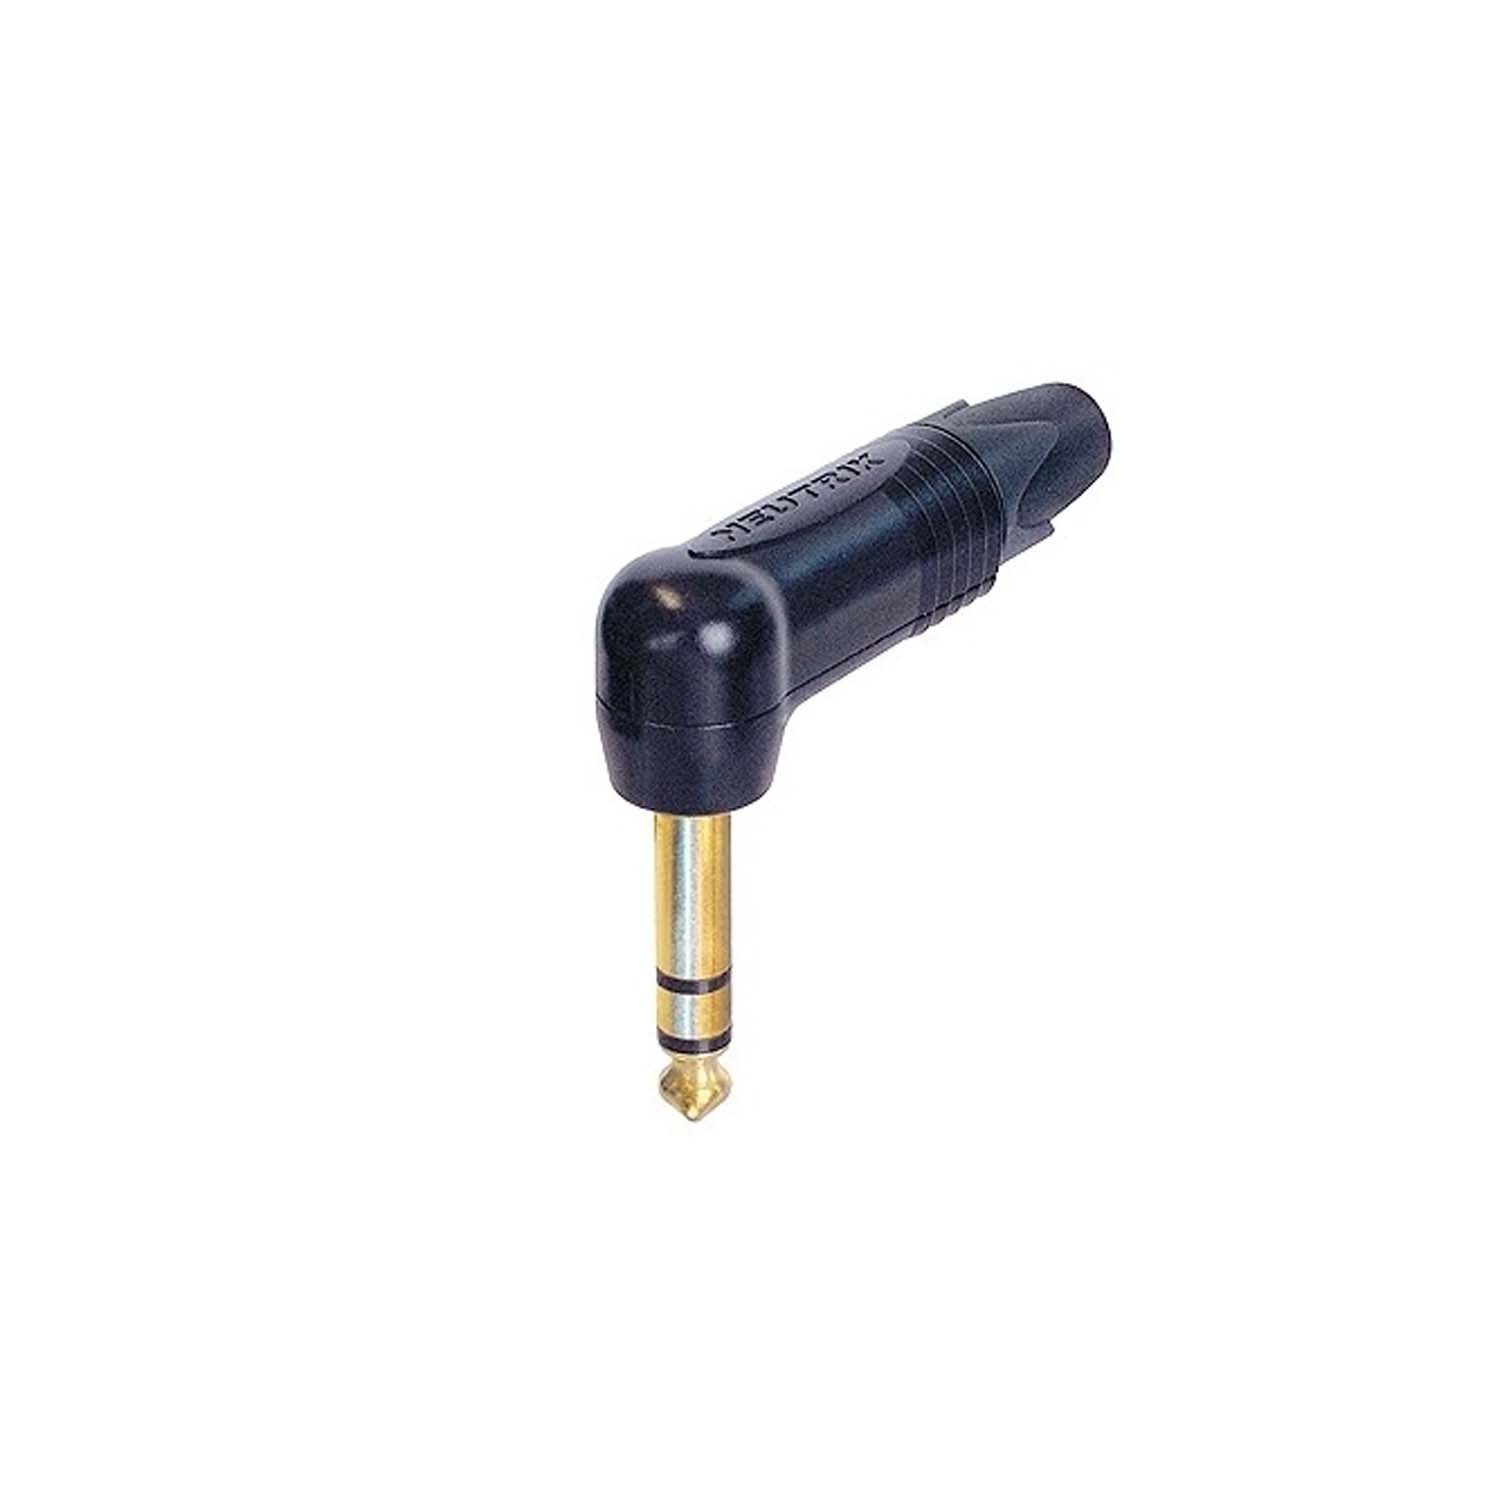 Neutrik 90 degree 14 inch TRS Male Slim Plug Black with Gold Pins